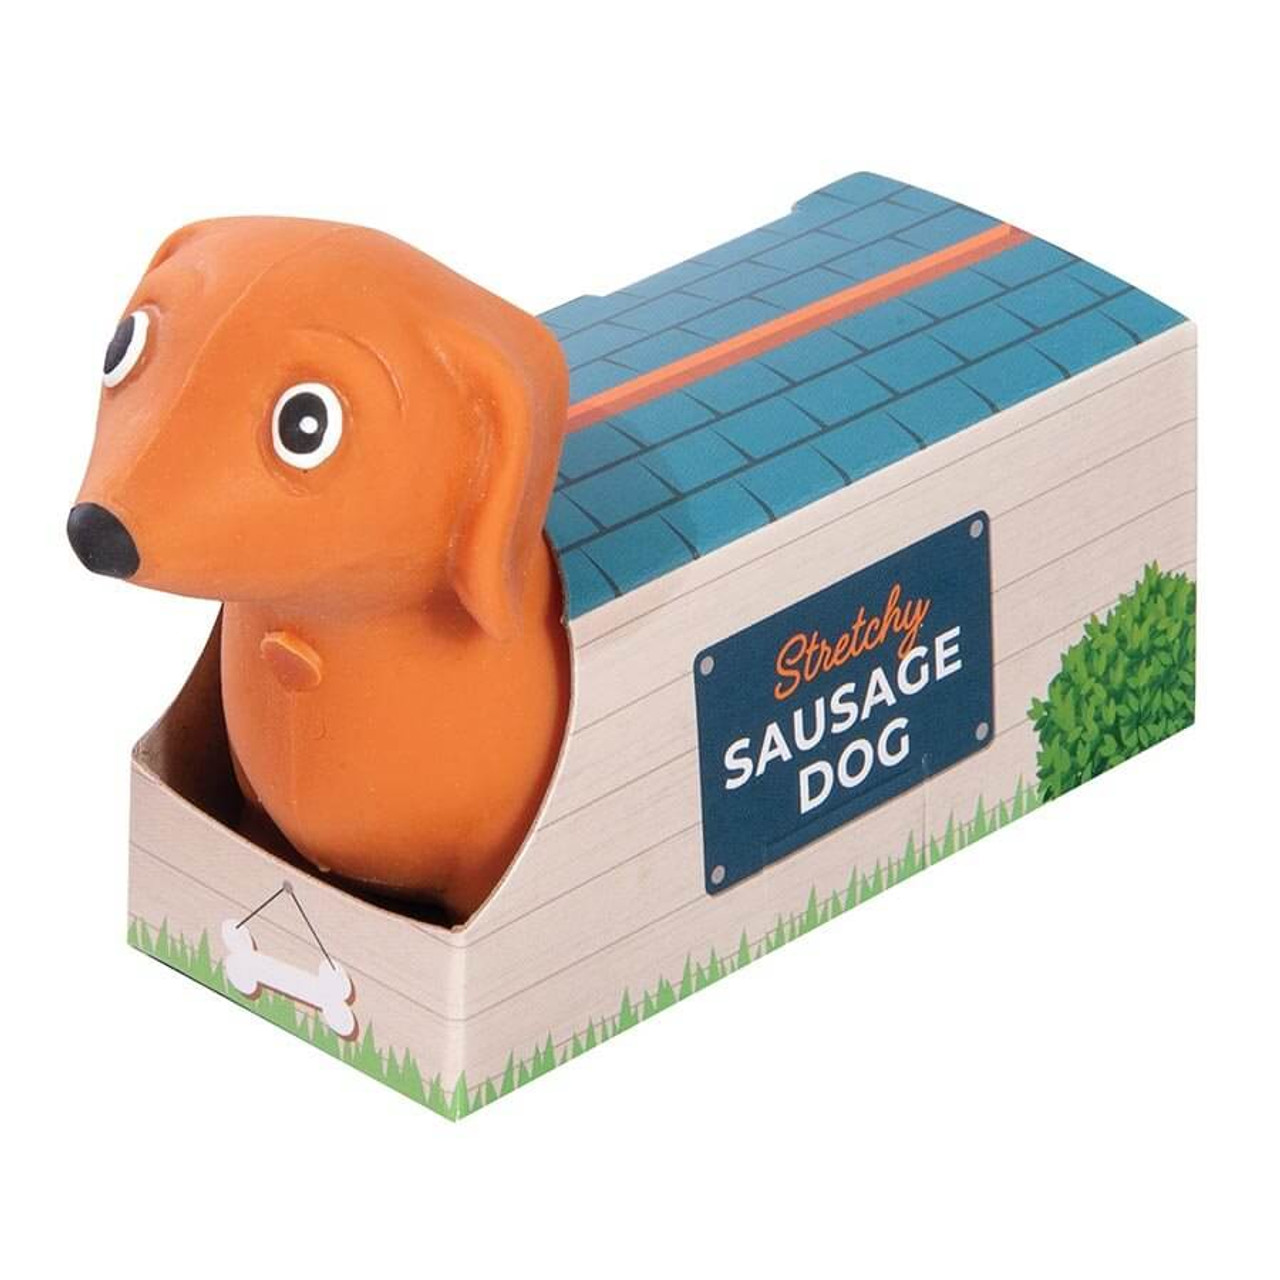 Weighted Sausage Dog - Grounding Sensory Toy